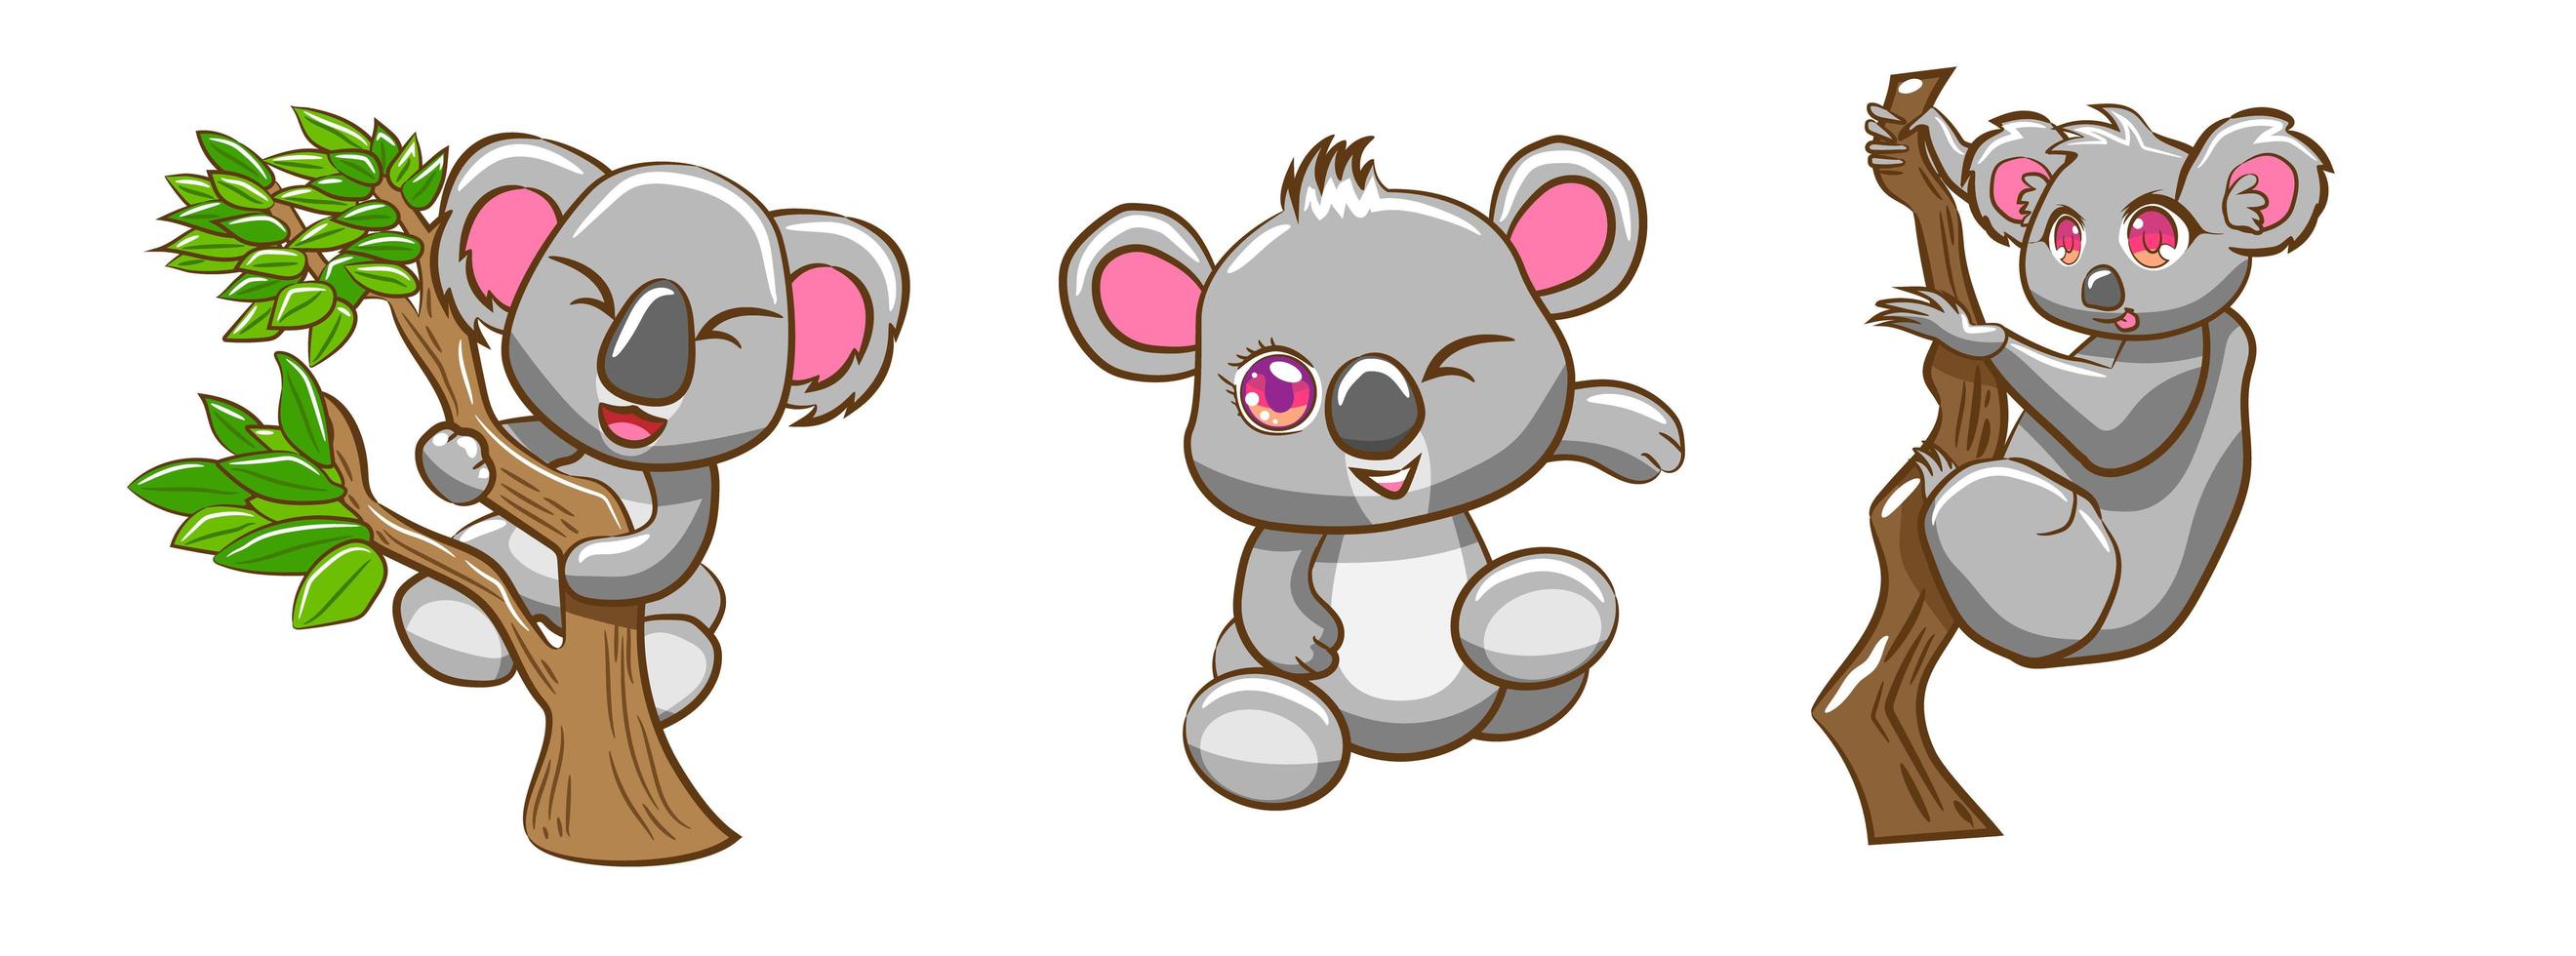 koala cartoon set vector